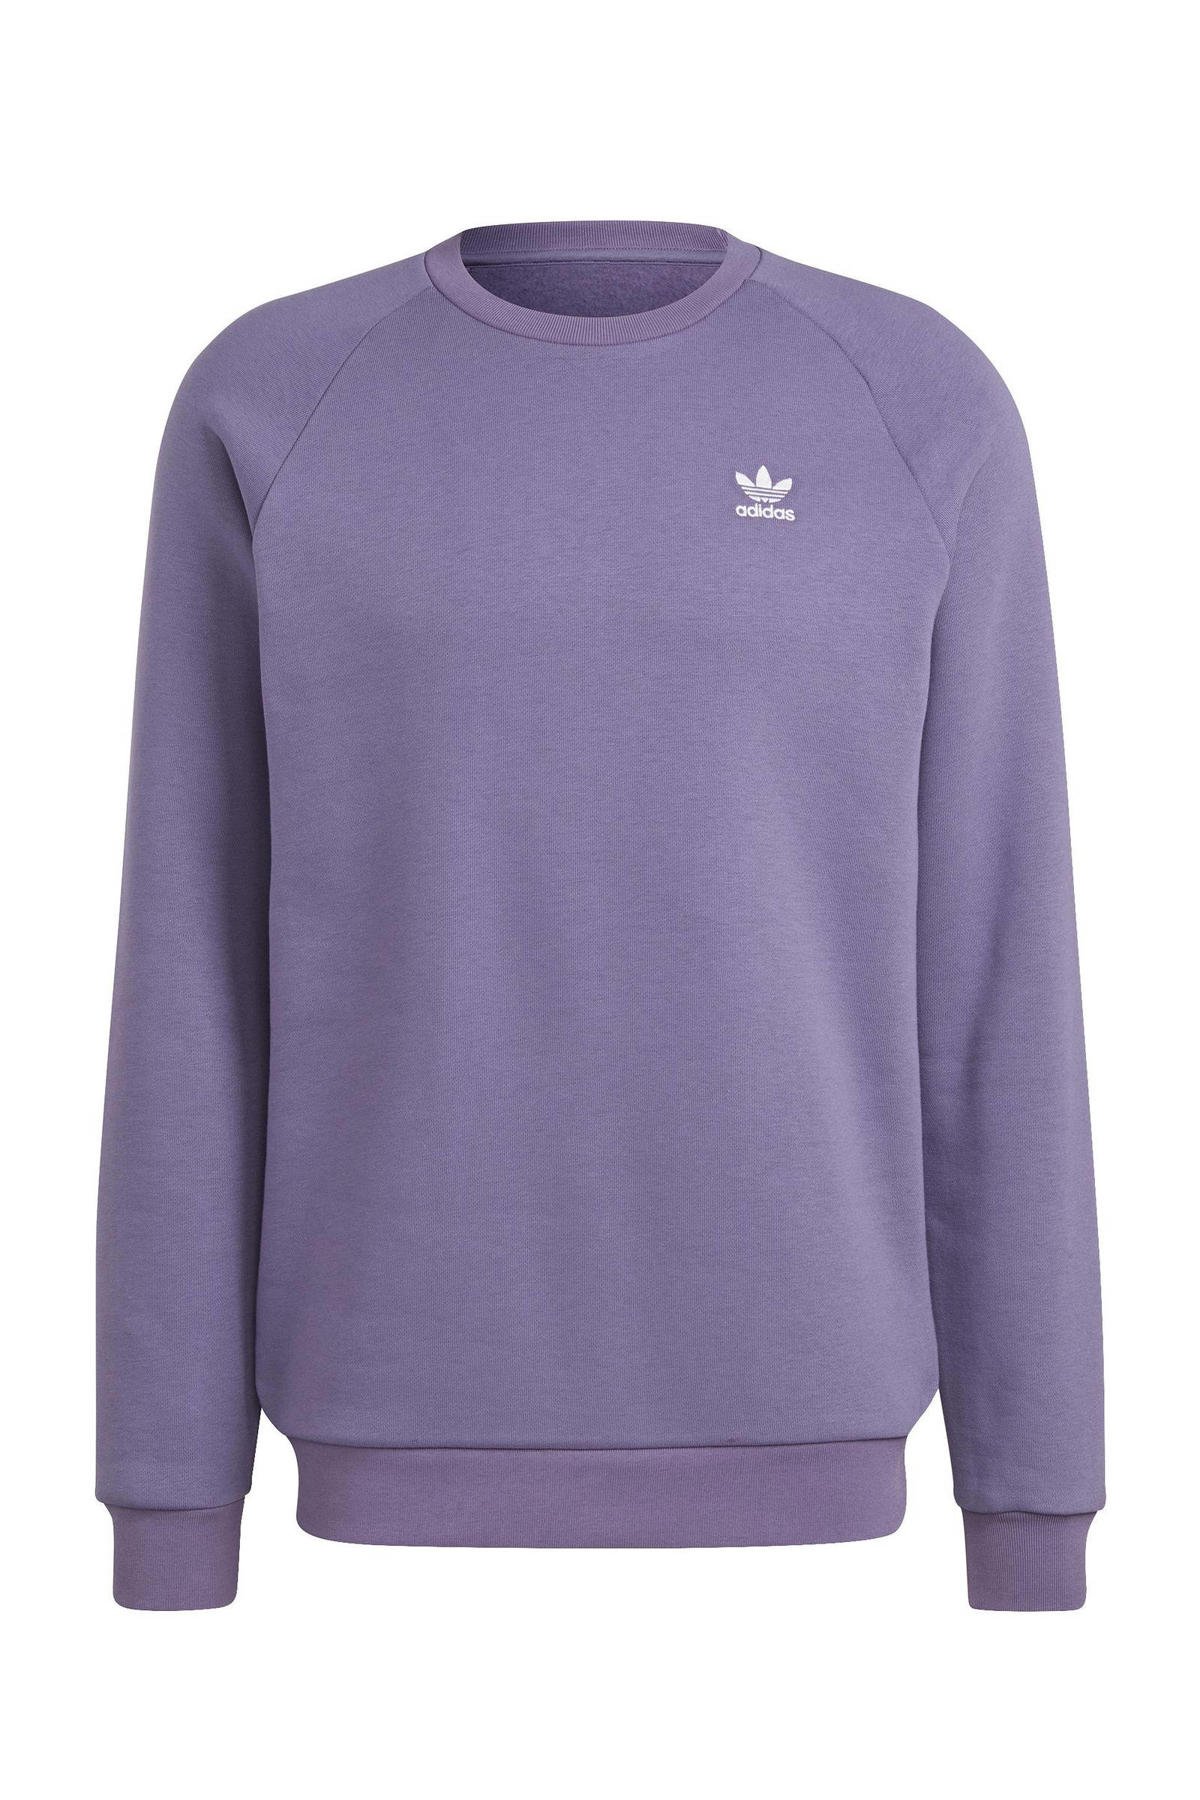 adidas Originals sweater paars wehkamp